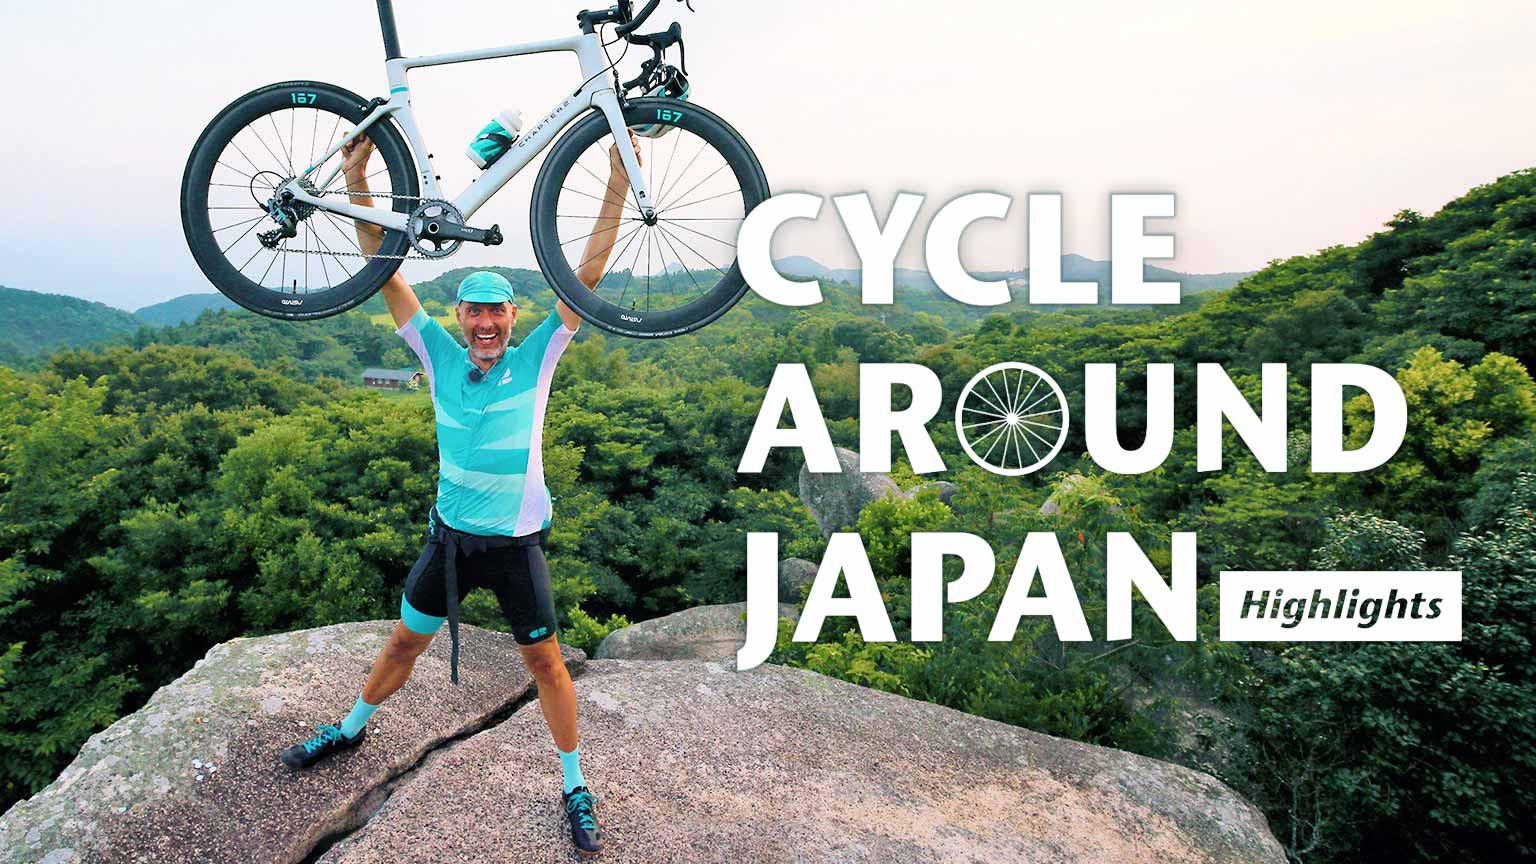 CYCLE AROUND JAPAN Highlights